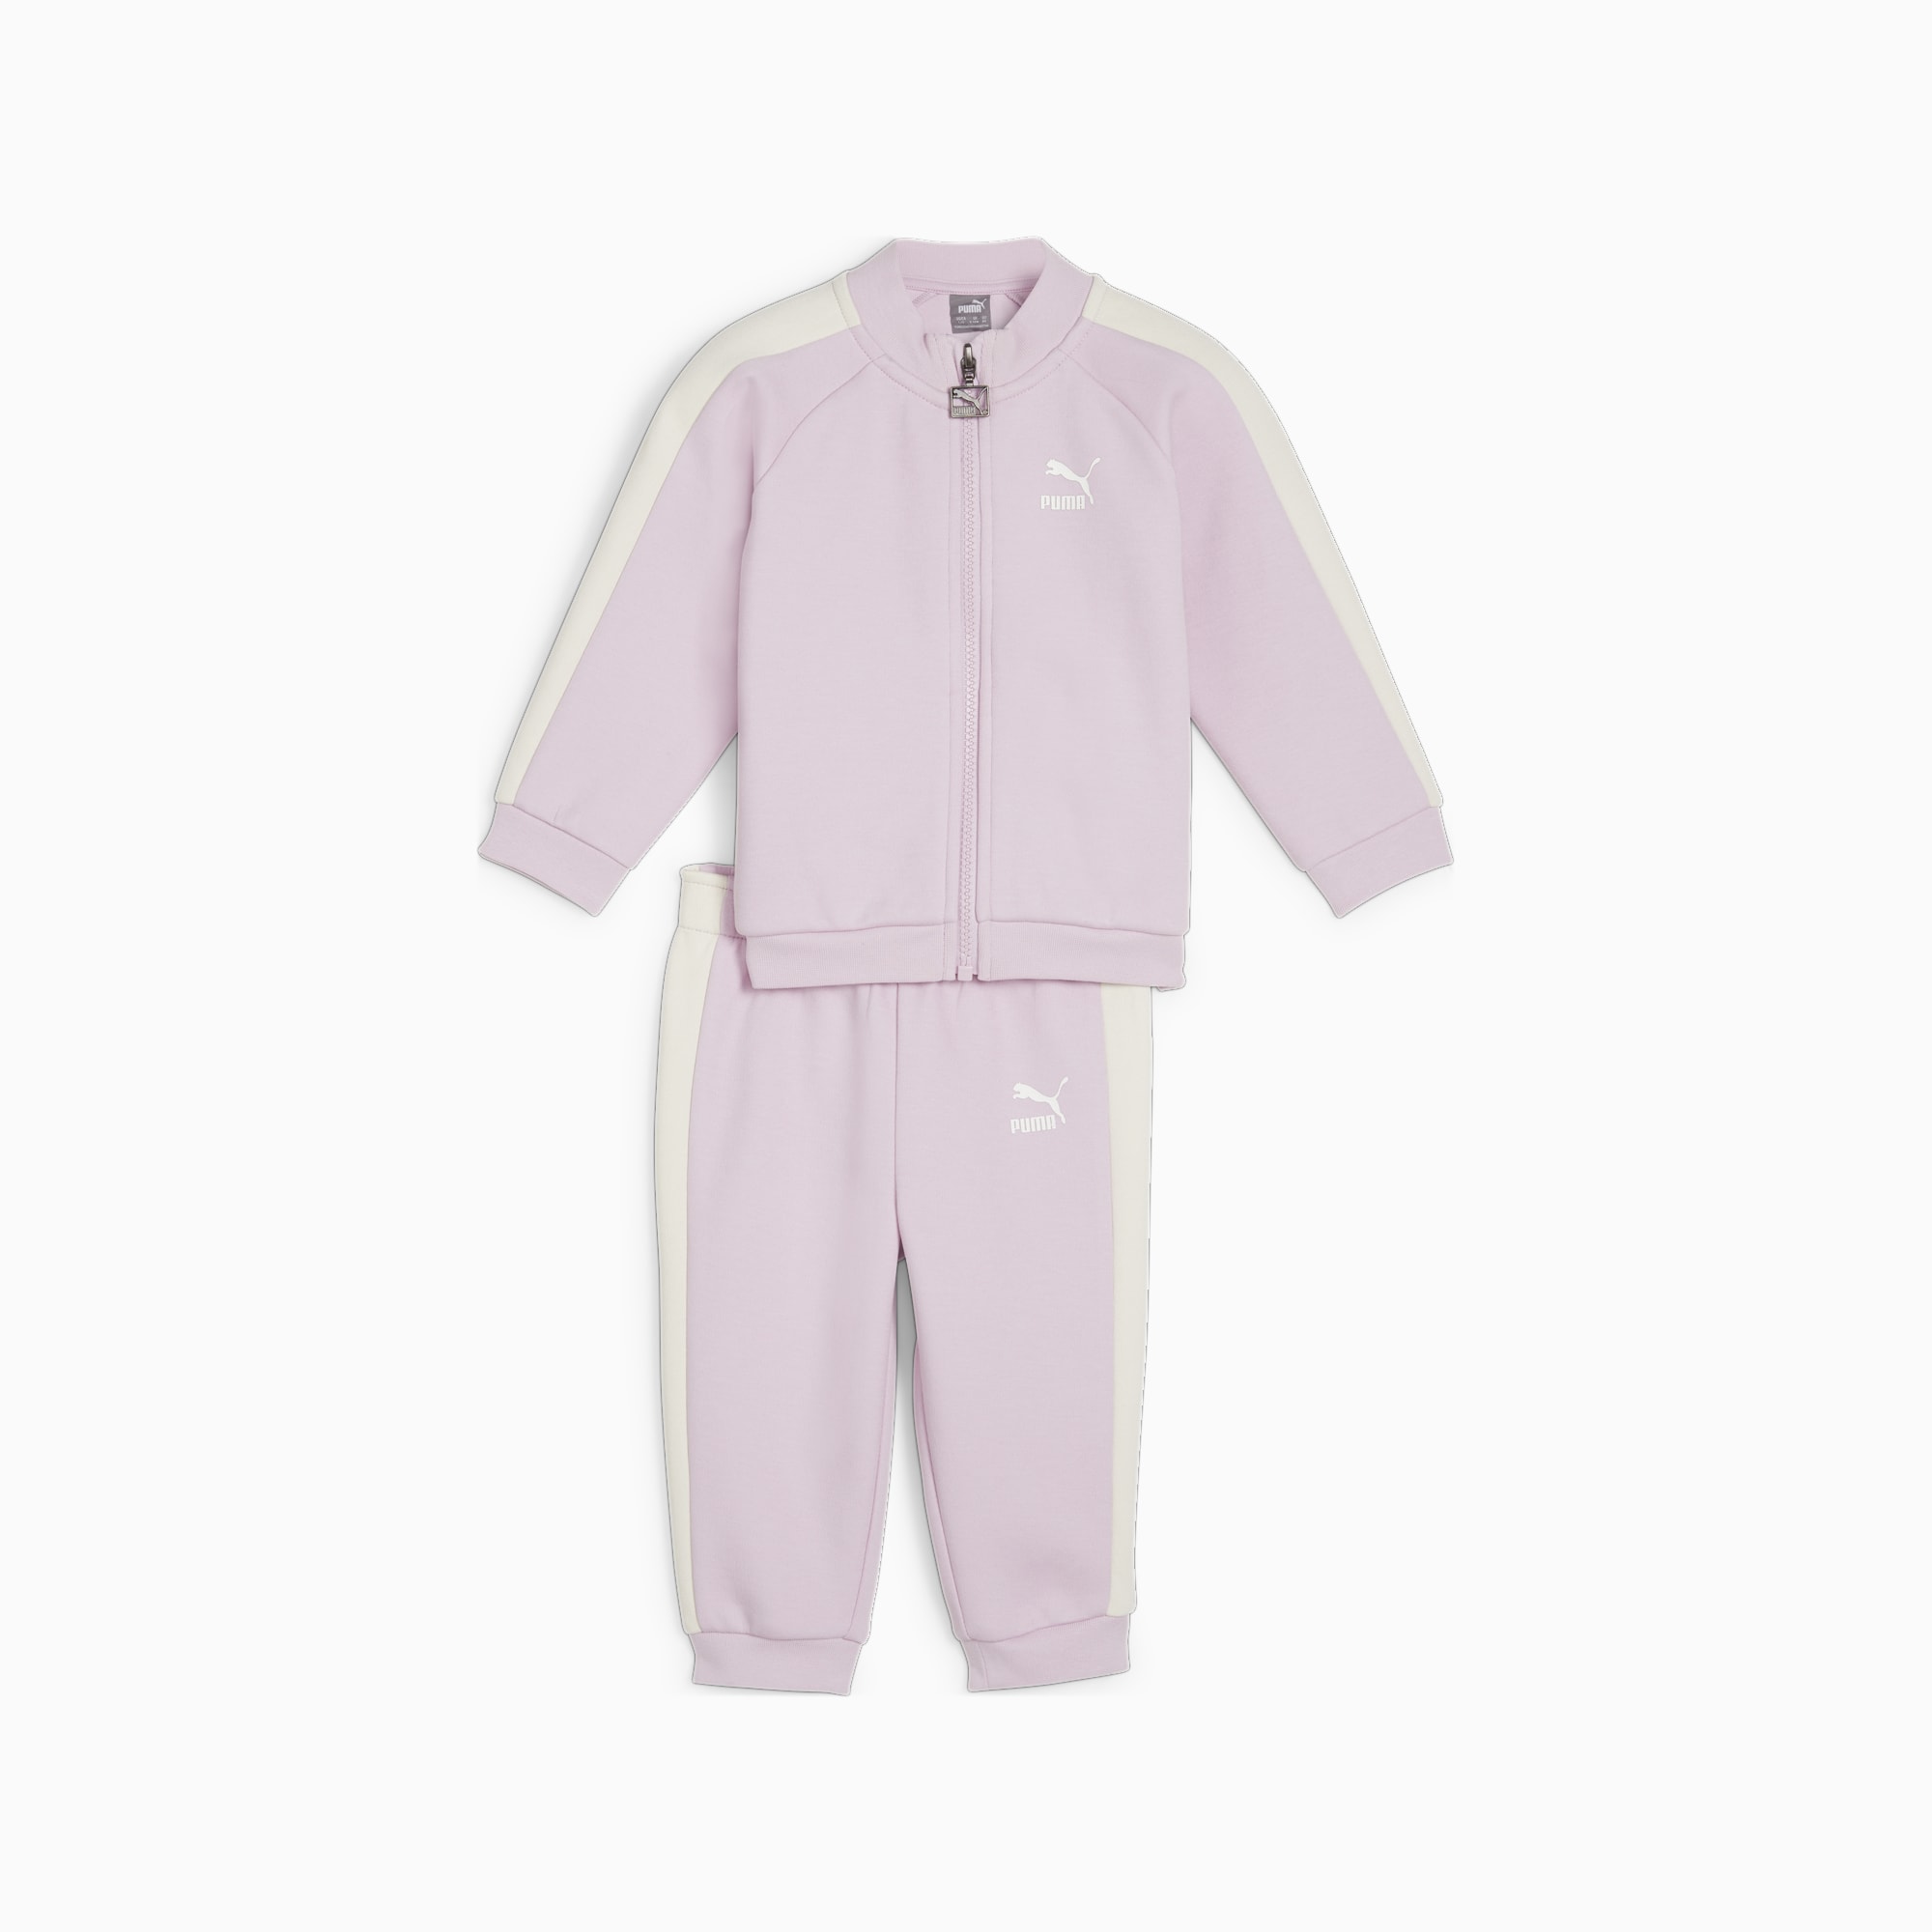 PUMA MINICATS T7 ICONIC Trainingsanzug Baby Für Kinder, Lila, Größe: 104, Kleidung